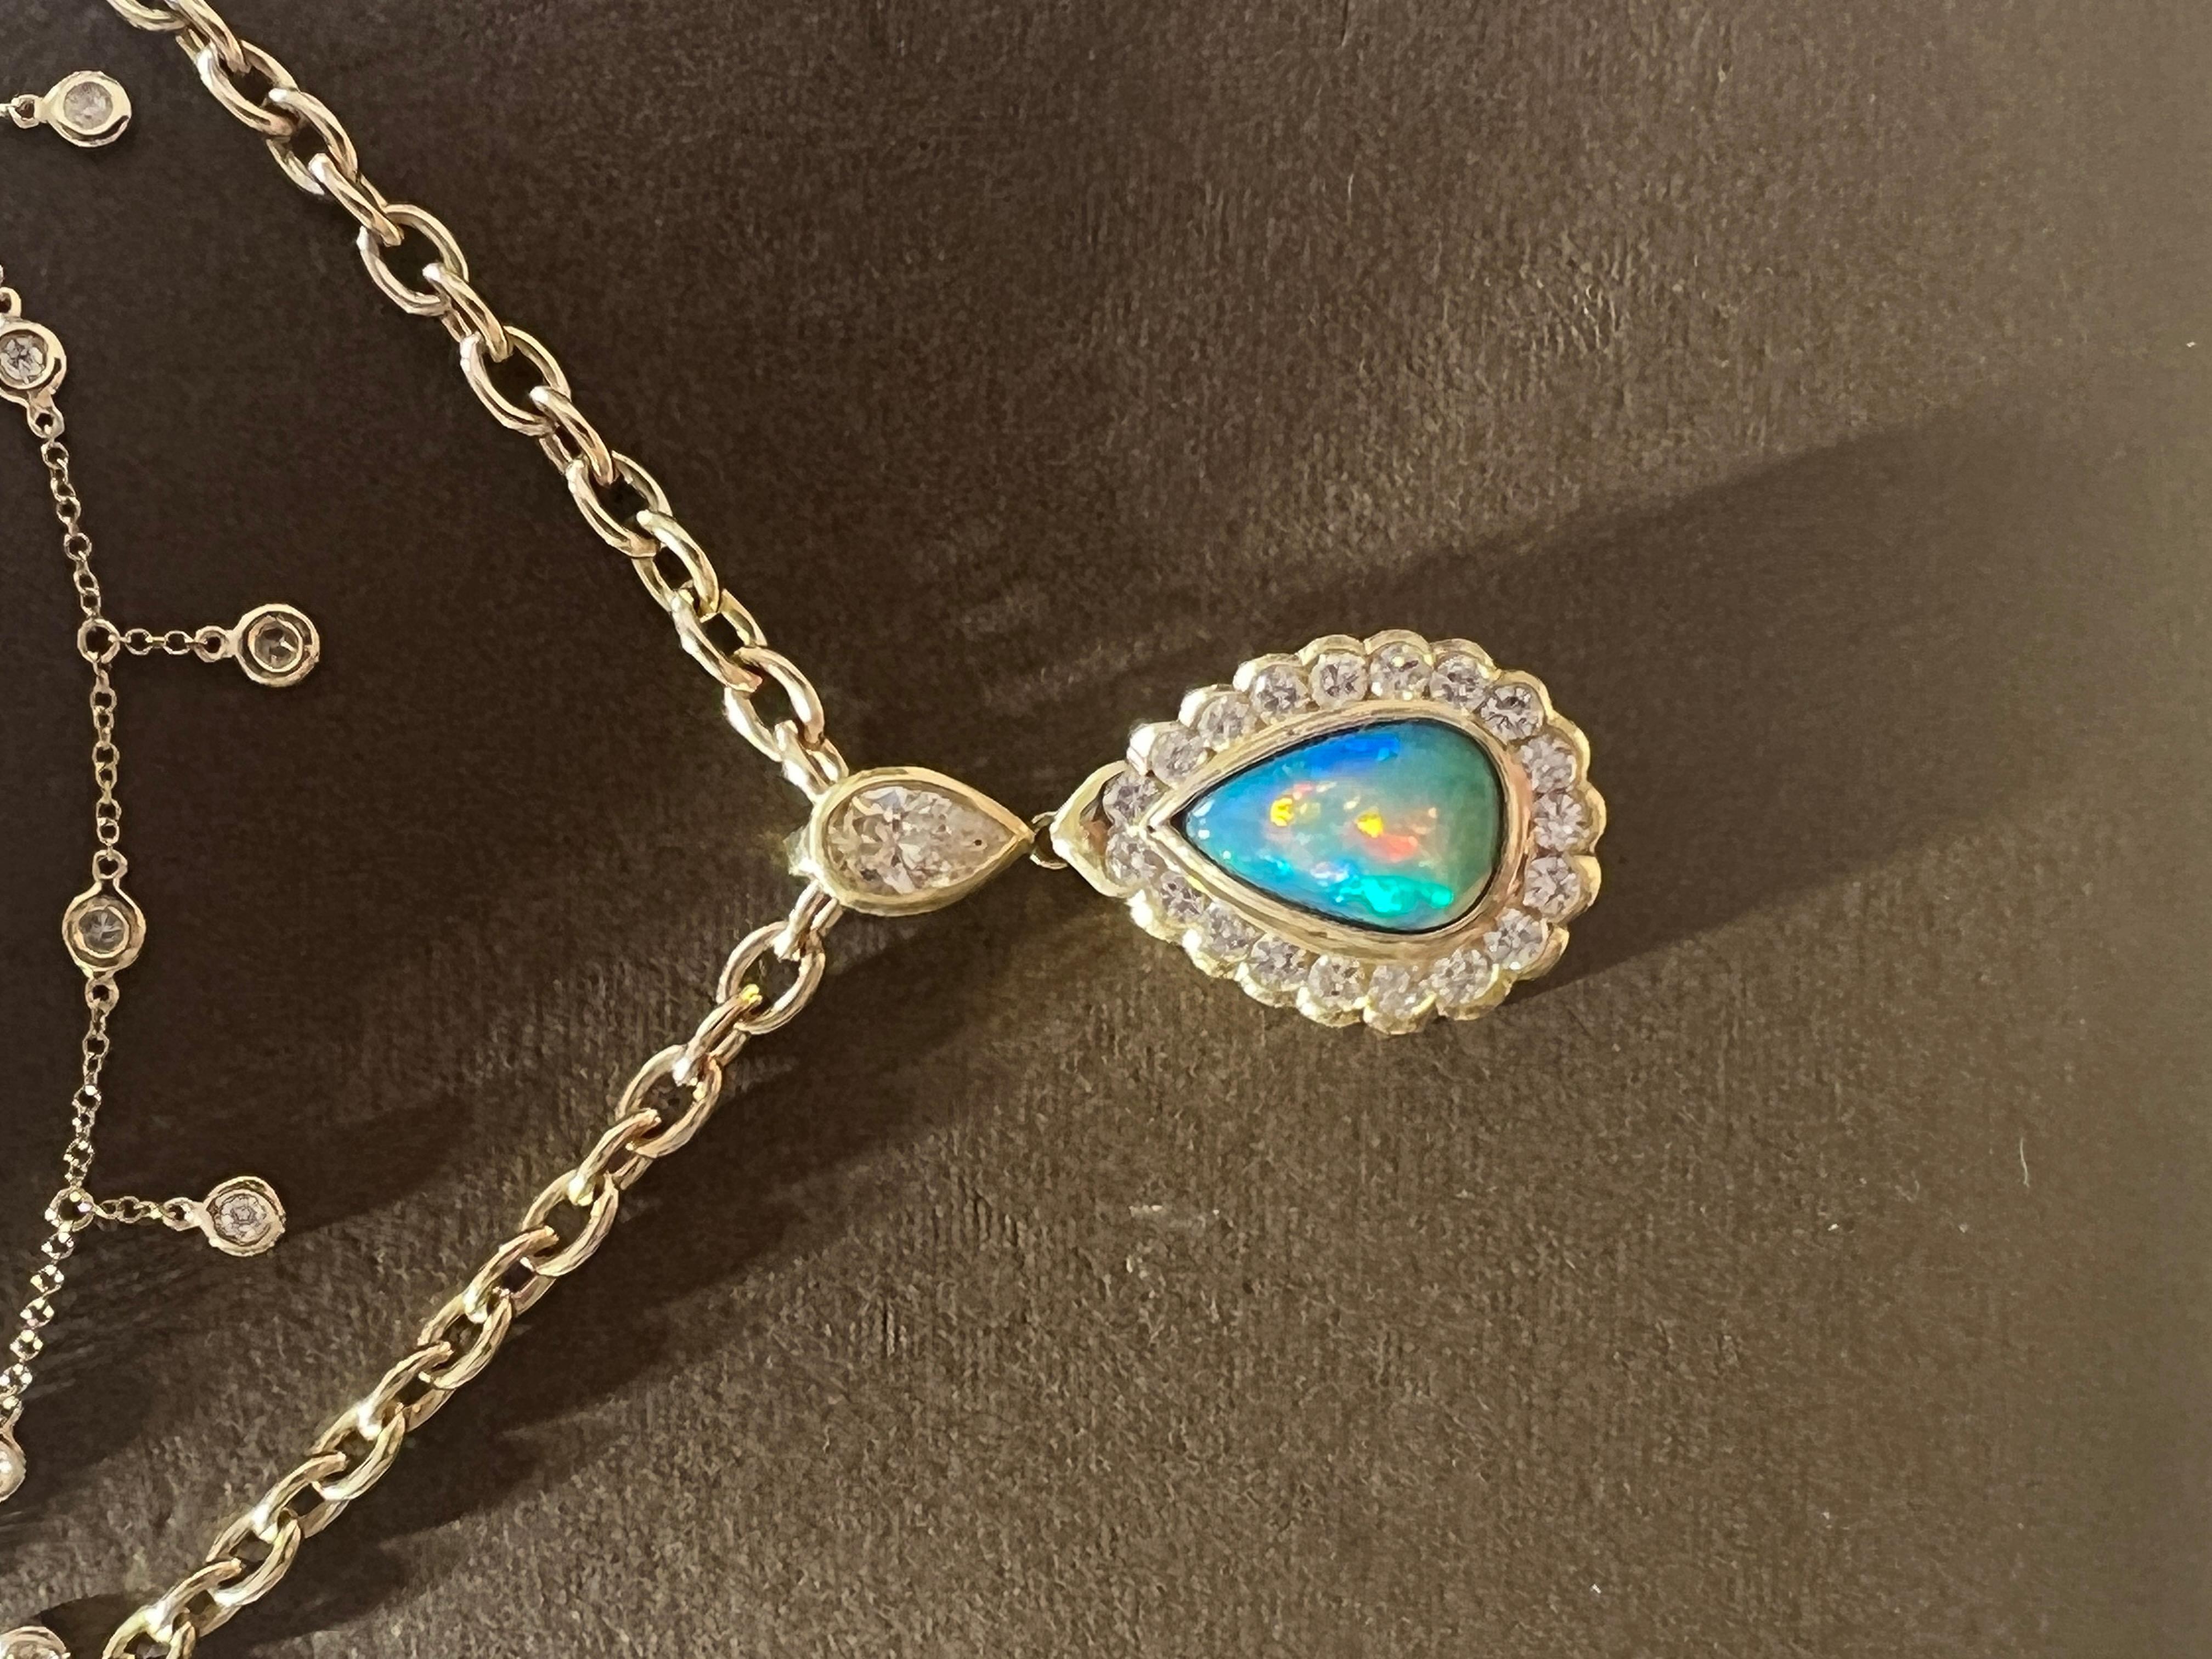 Pear Cut Mark Areias Jewelers Handmade Natural Ethiopian Opal & Diamond Pendant 18KY